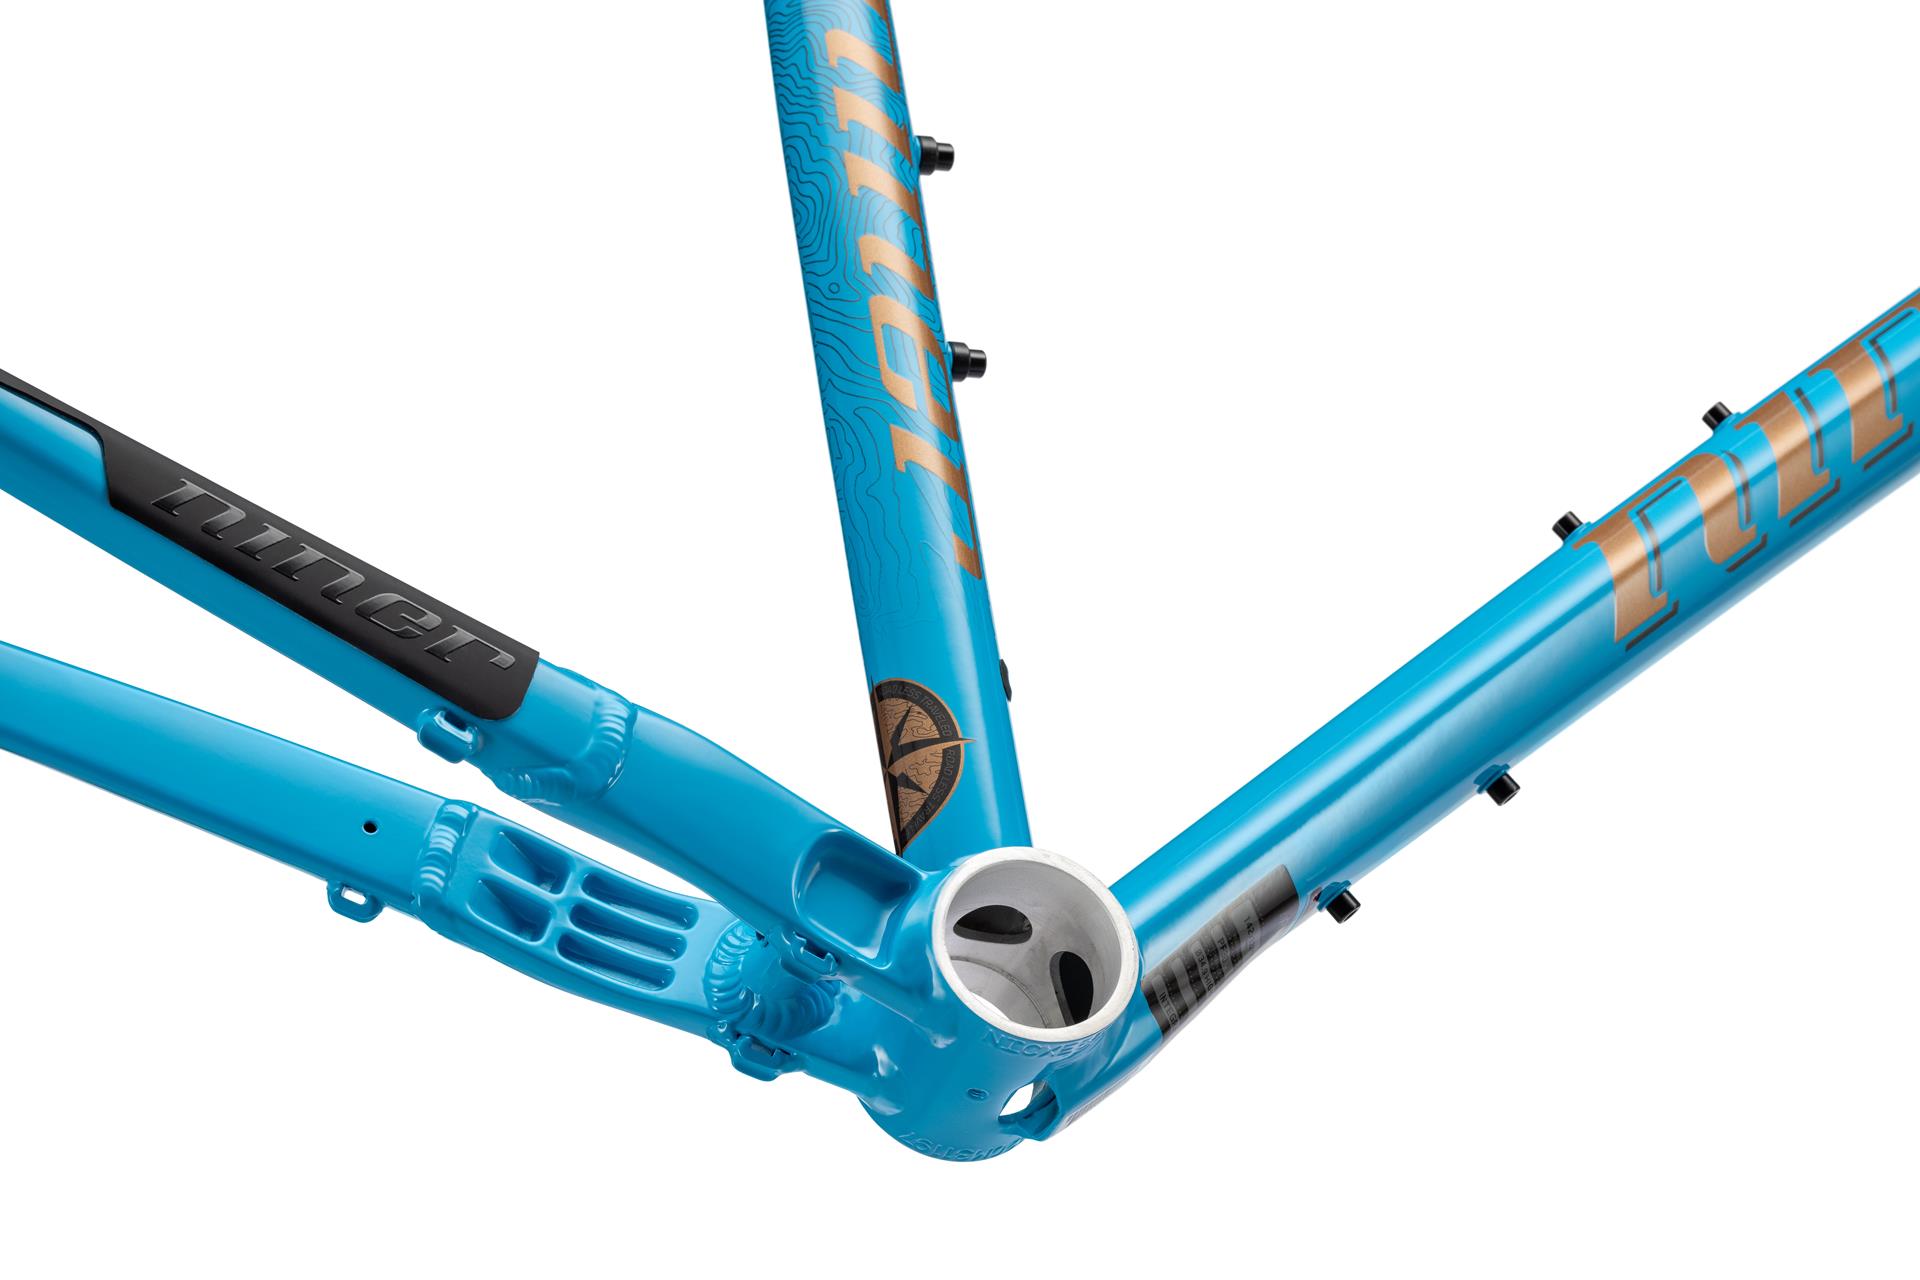 Niner RLT 3-star велосипед, серый/голубой, 56